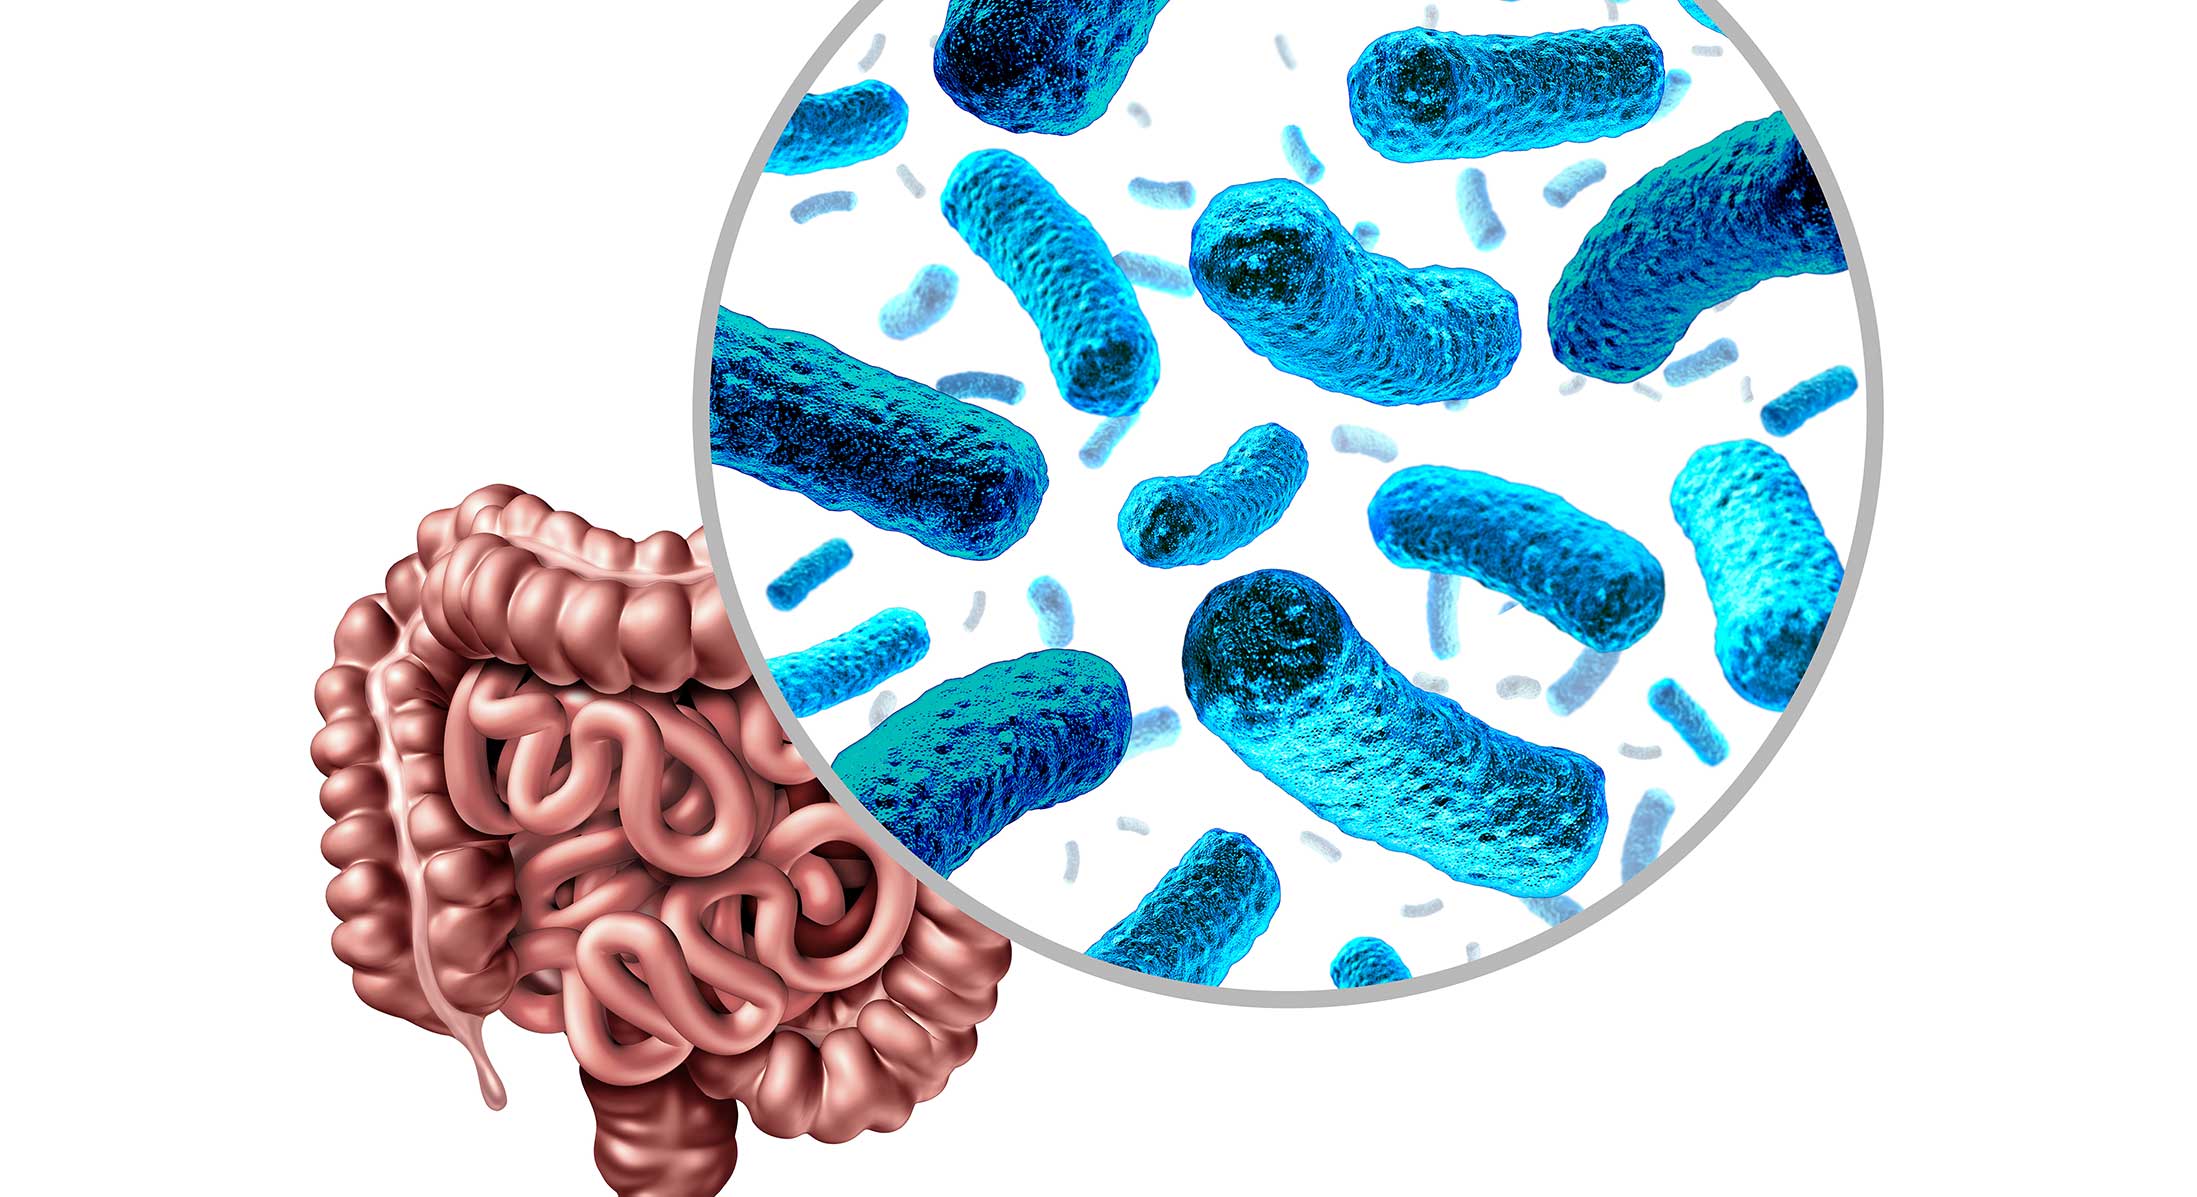 Microbiotica intestinal